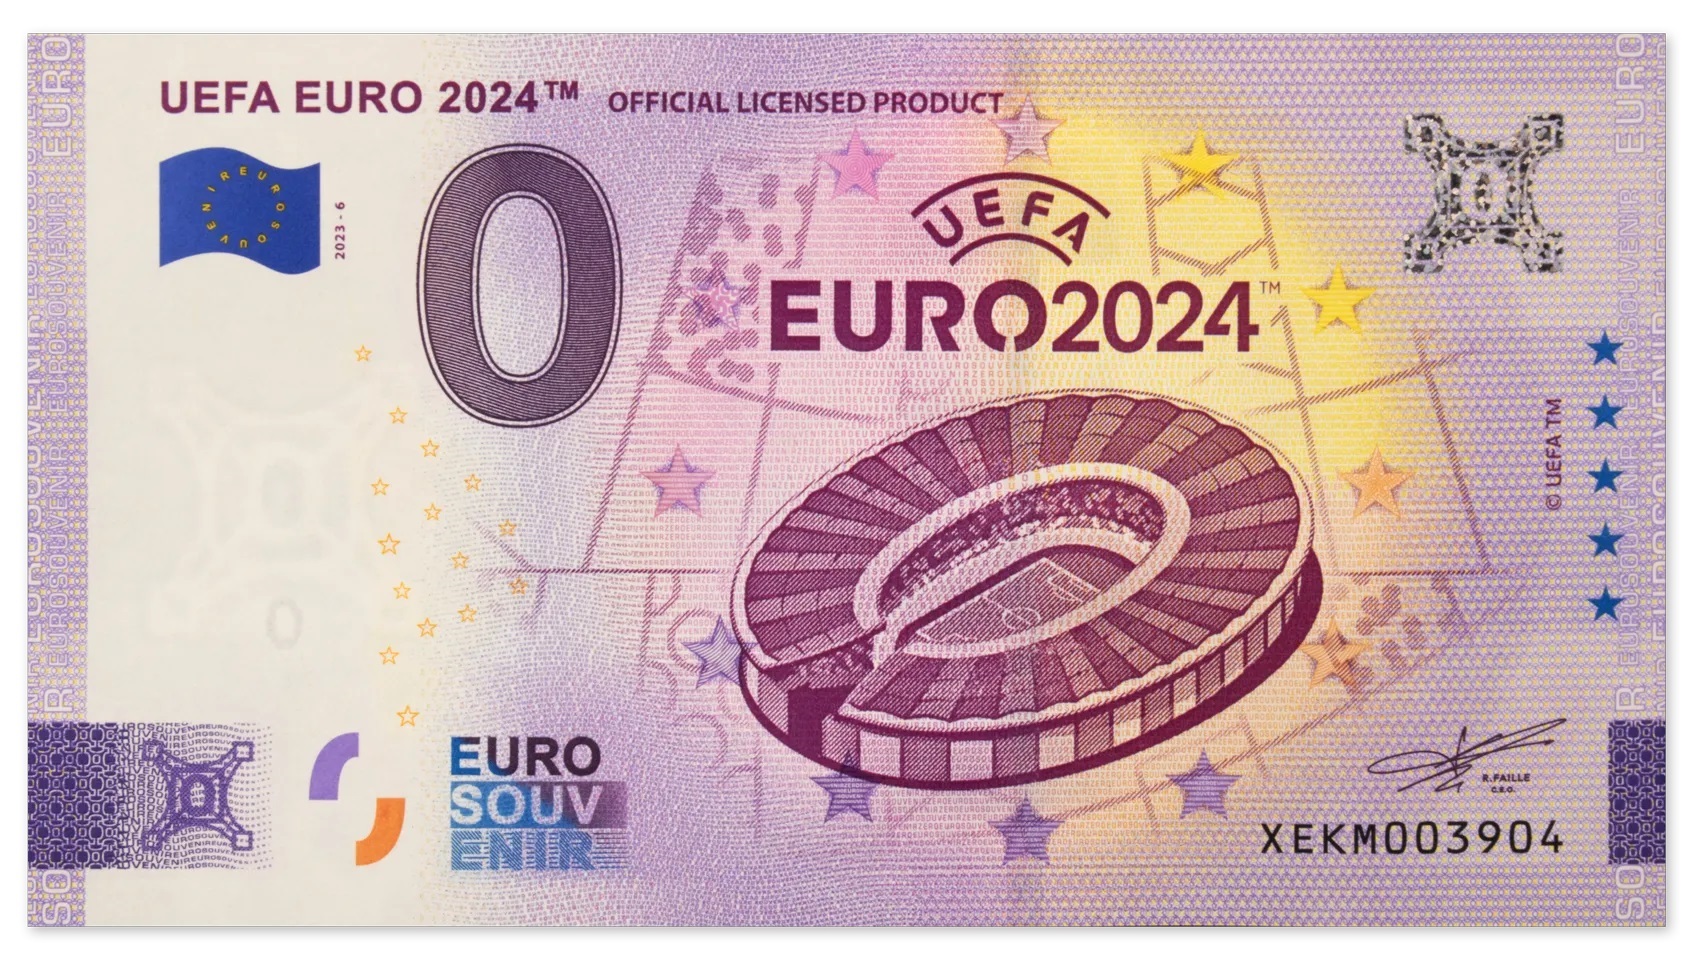 (EURBILLS.0.euro.2024.1.RF.E.XEKM.4) 0 euro banknote Germany 2024 - UEFA Euro, Germany 2024 (stadium) Front (zoom)